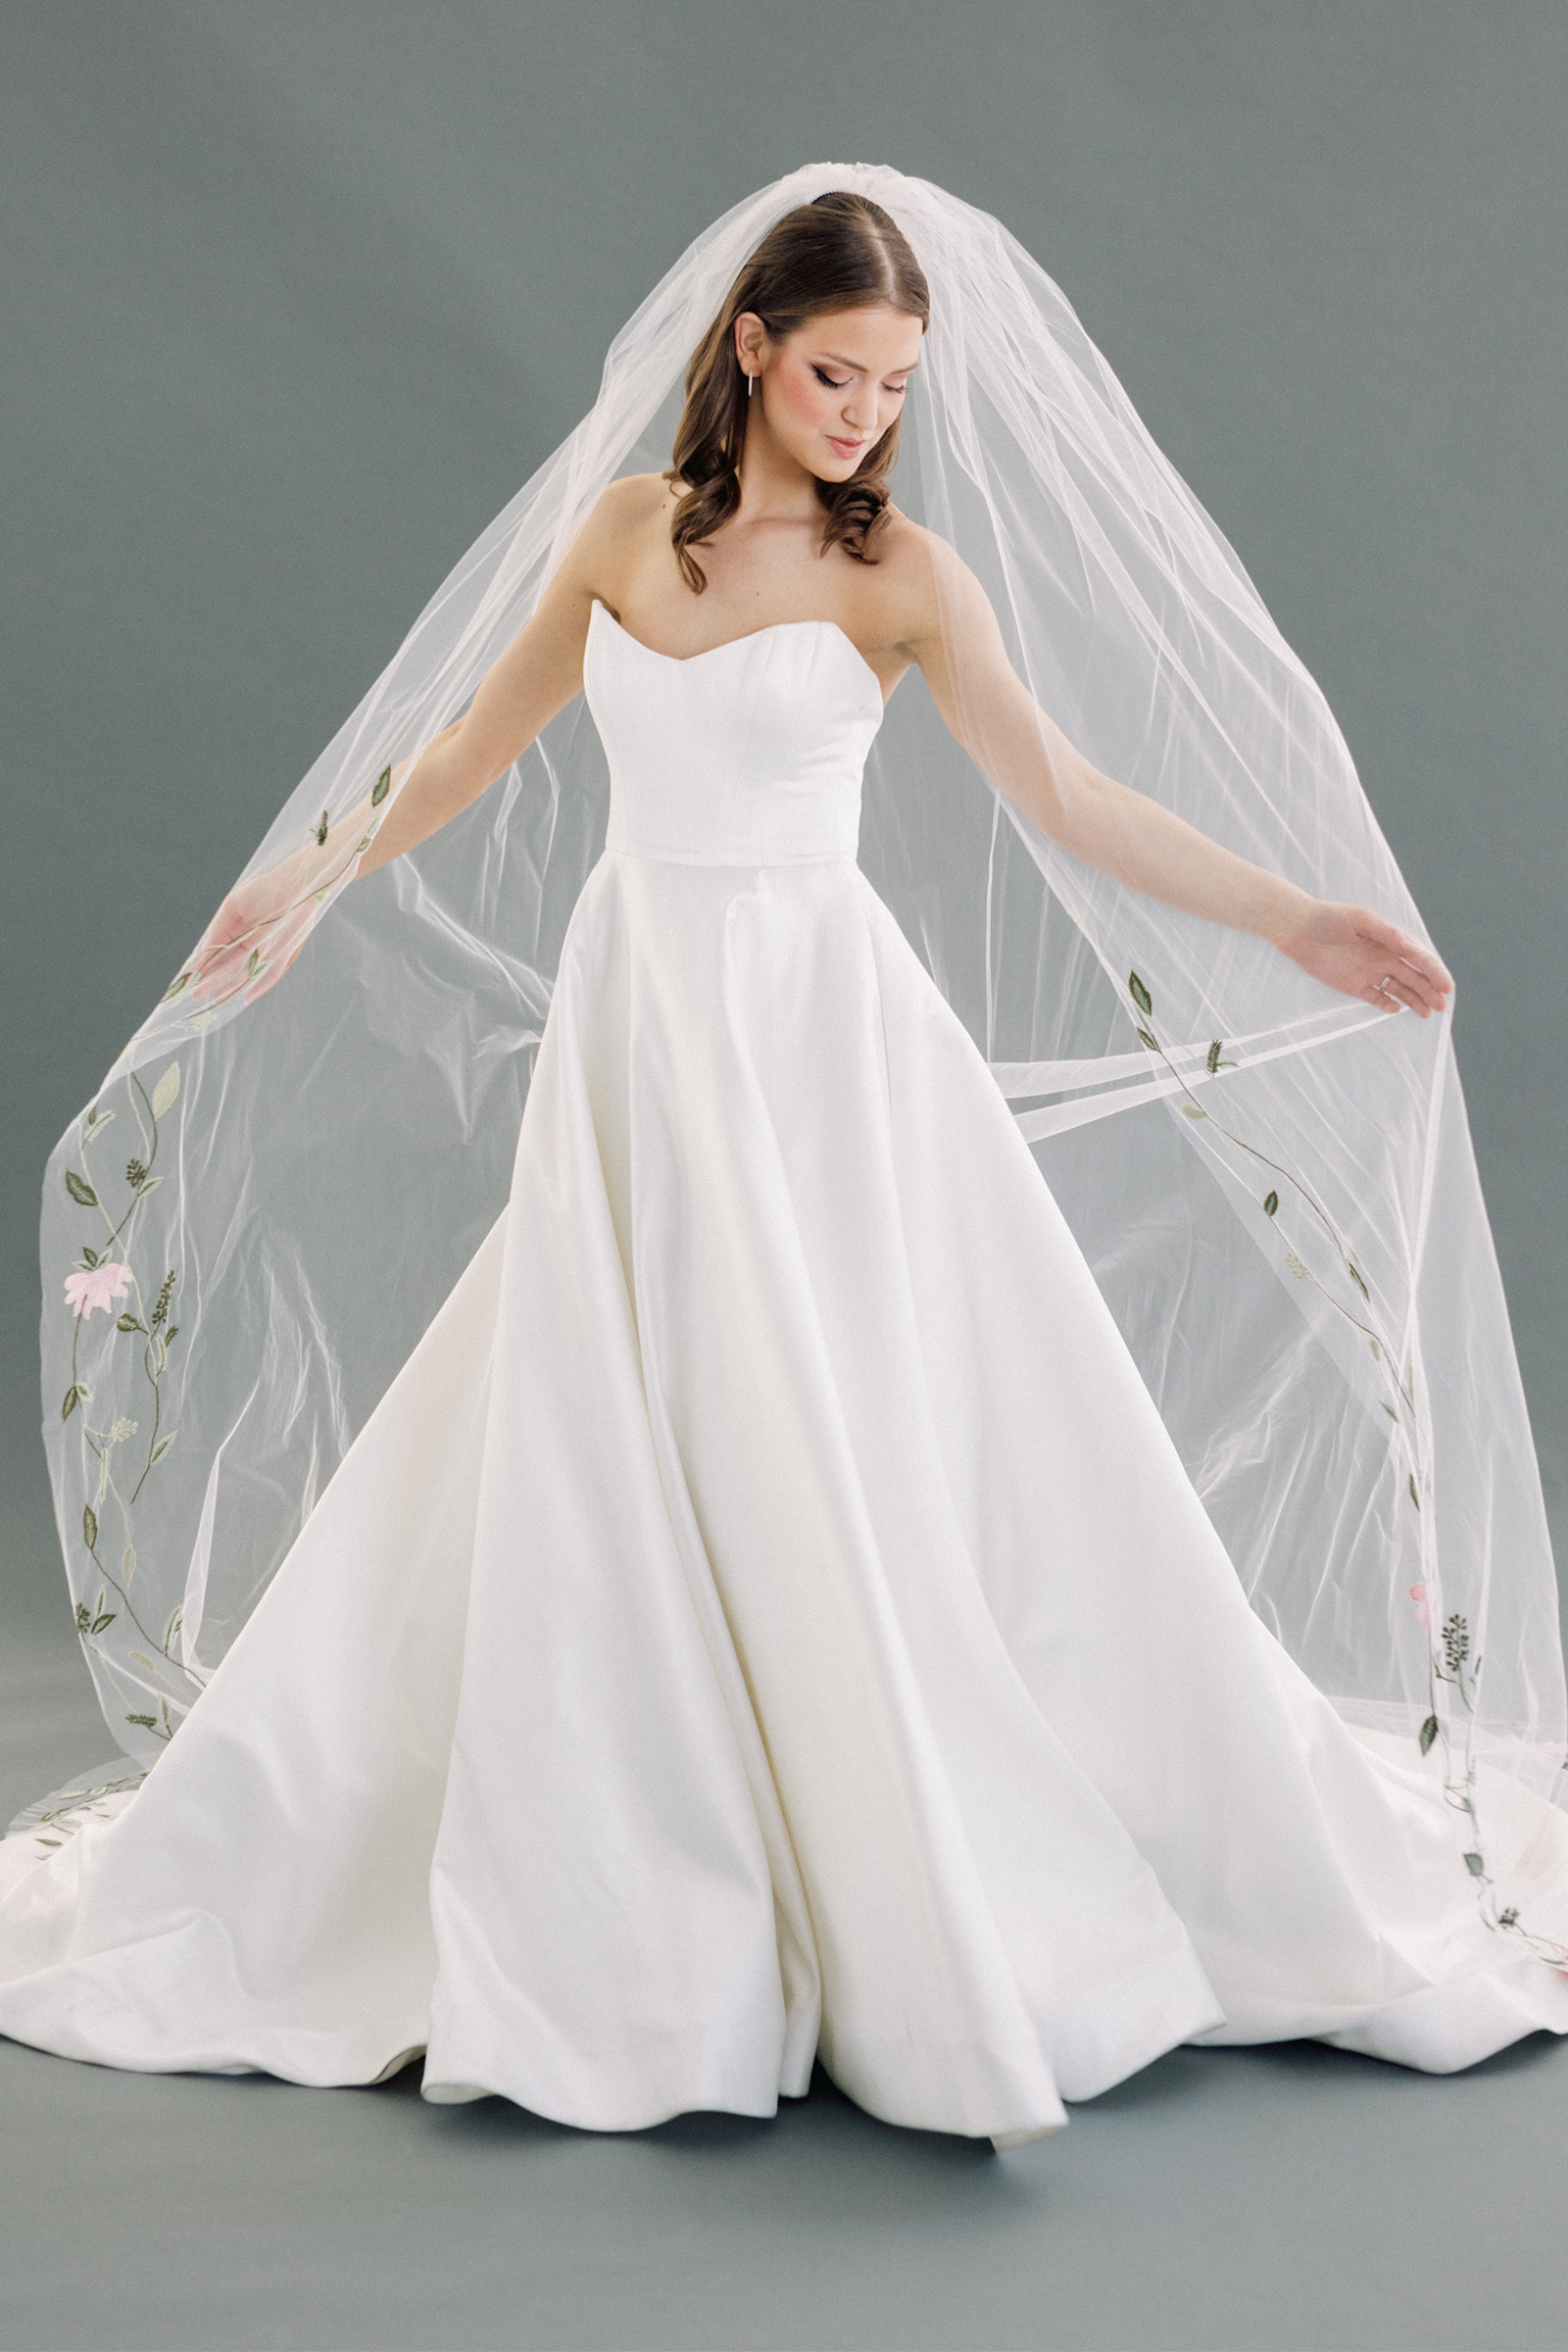 luxury wedding veils